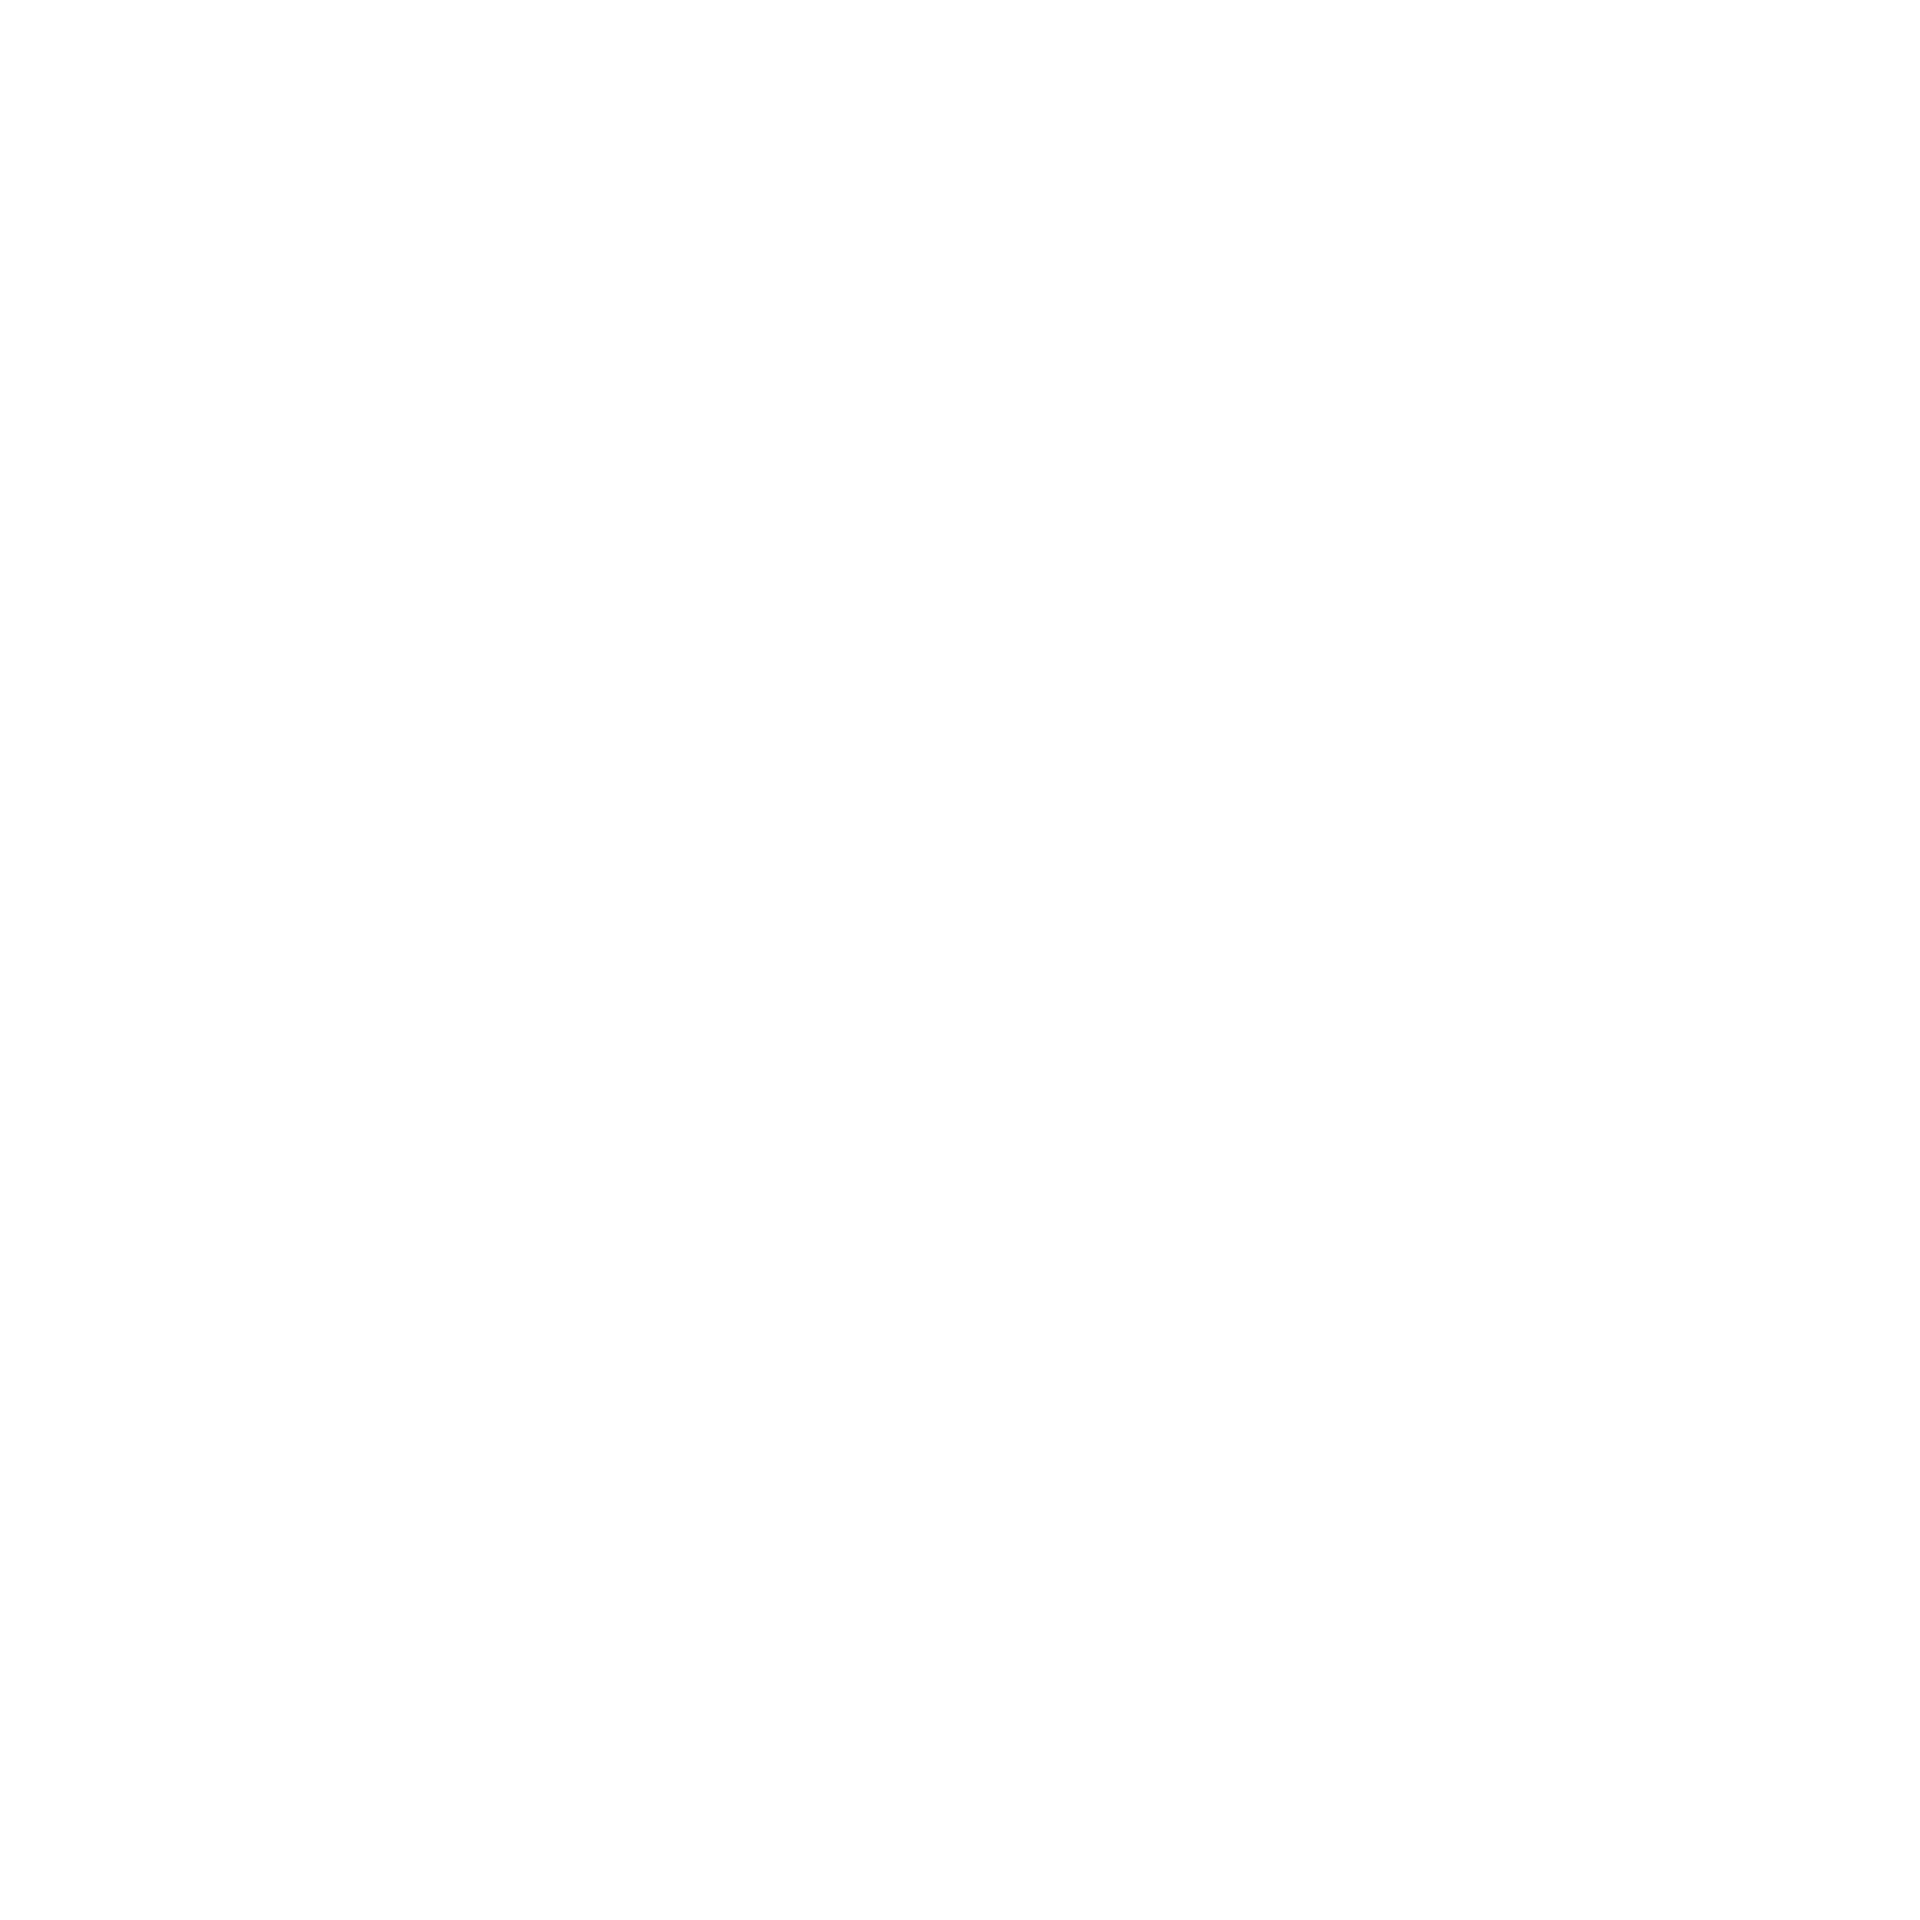 Landsale • 2021